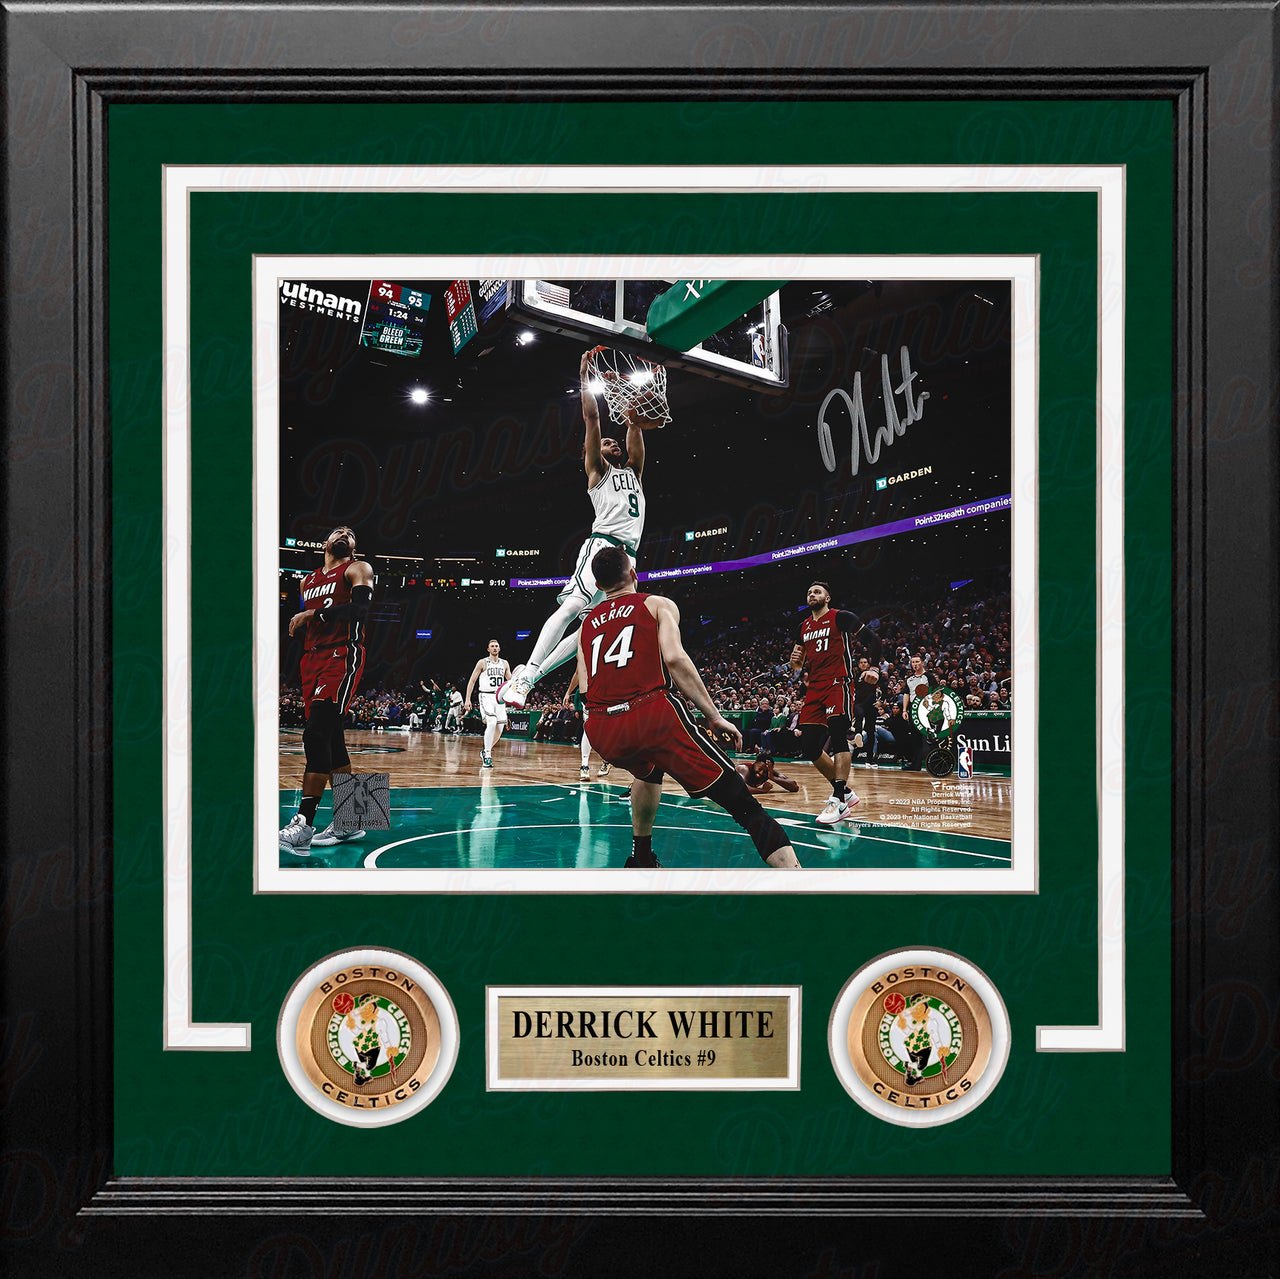 Derrick White Slam Dunk Boston Celtics Autographed 8" x 10" Framed Basketball Photo - Dynasty Sports & Framing 